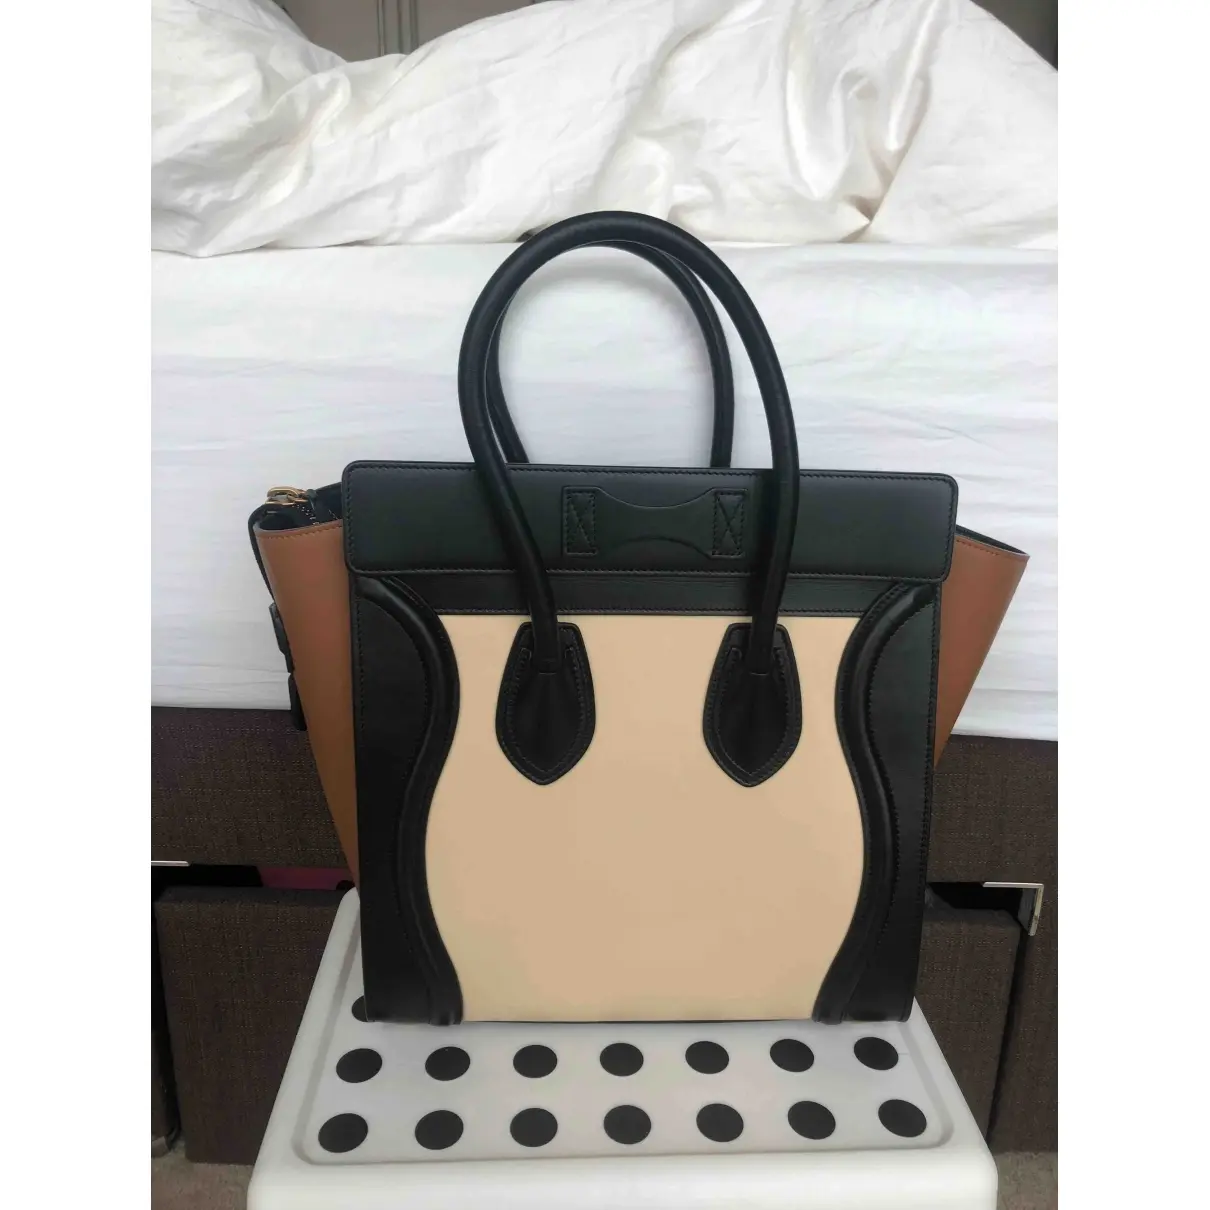 Buy Celine Luggage leather handbag online